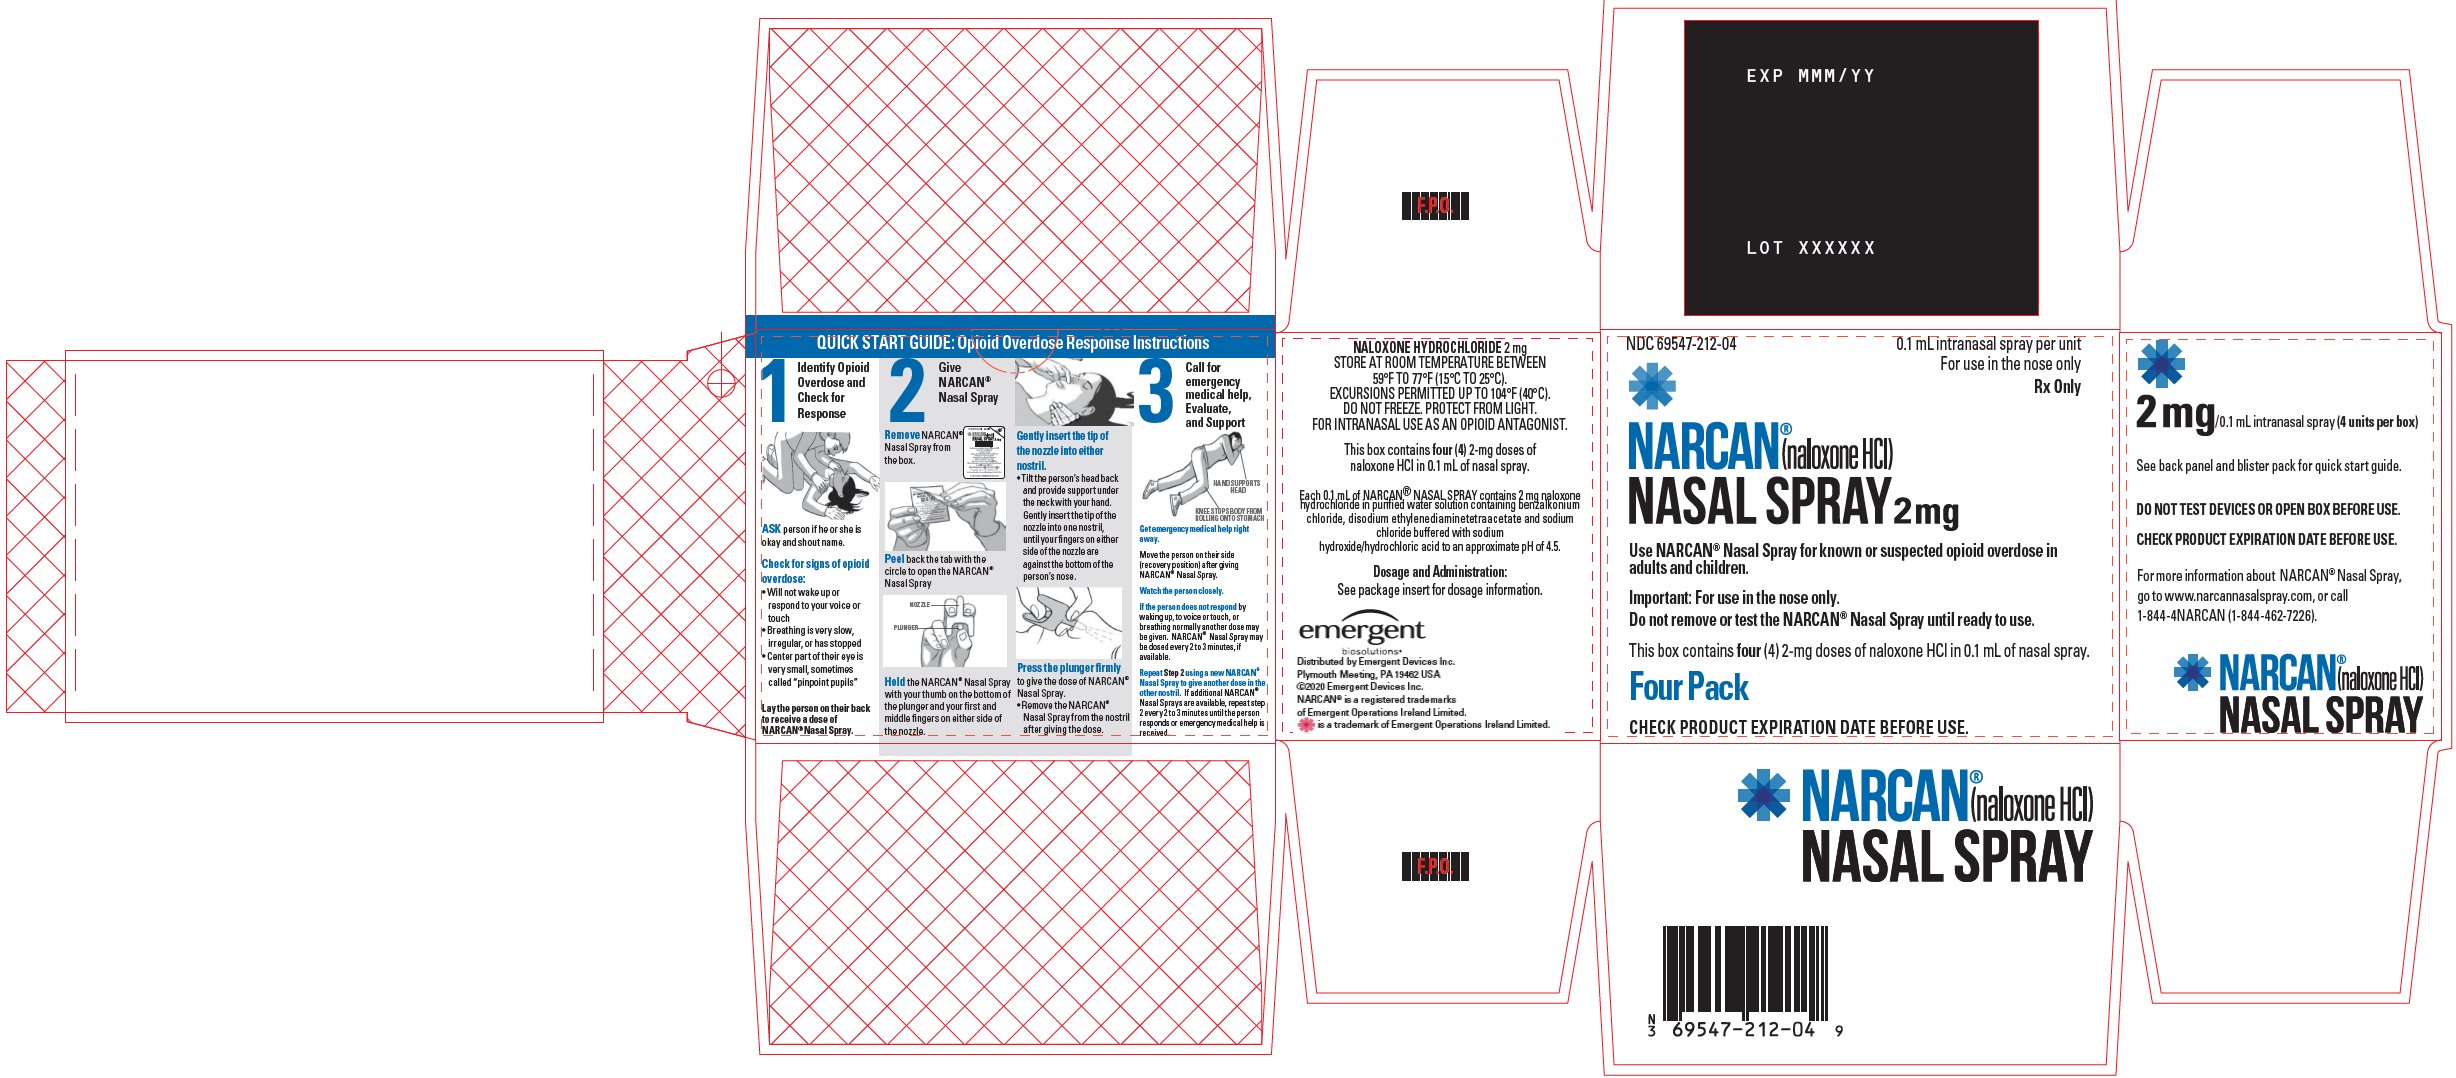 Narcan (naloxone HCl) Nasal Spray 2 mg carton label